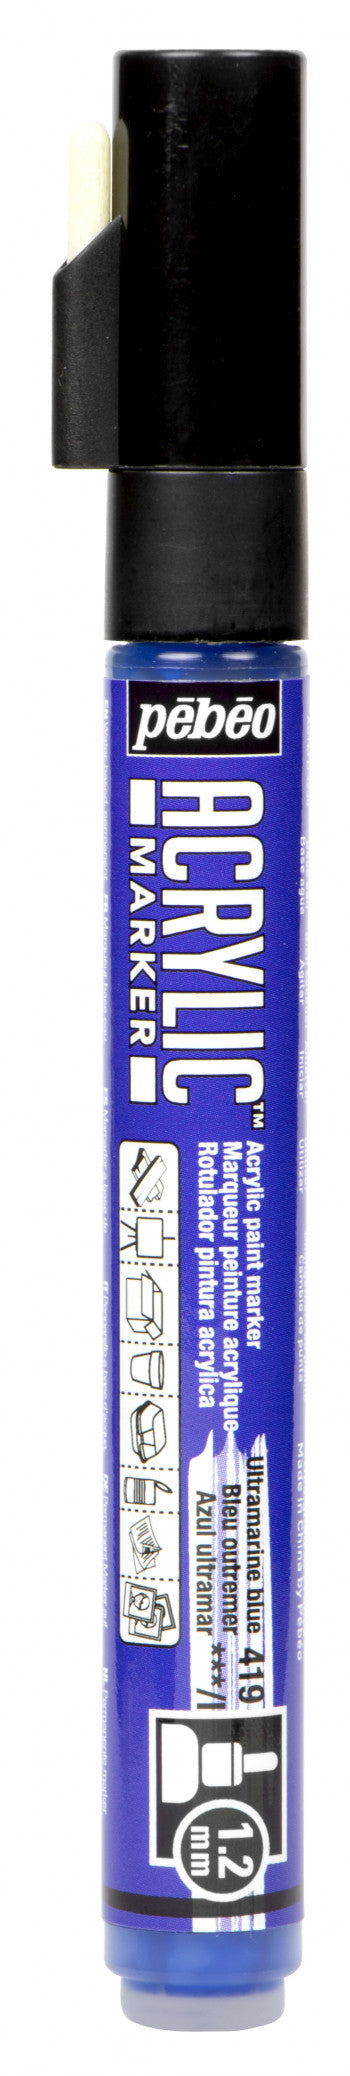 Acrylic Marker 1.2mm Pebeo Ultramarine blue